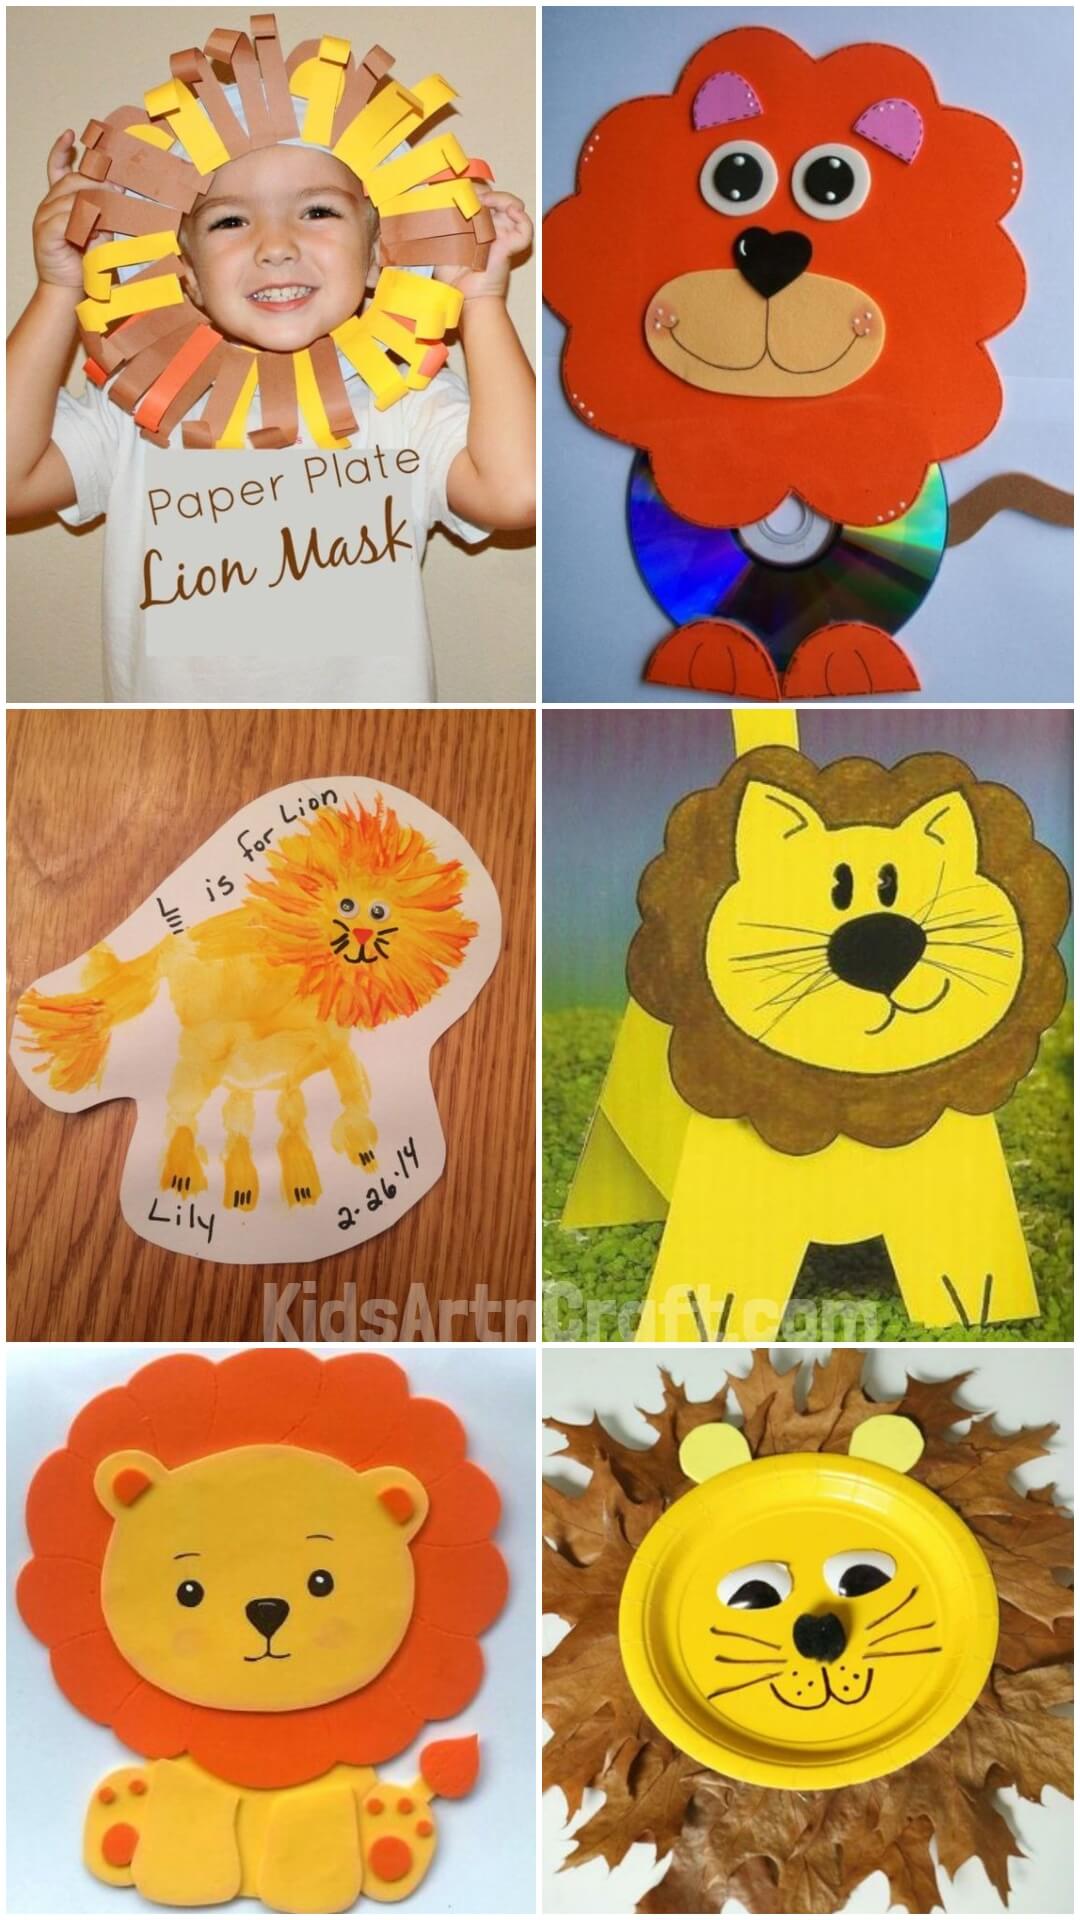 Lion Craft Ideas For Kids Using Paper Plate, Felt & More